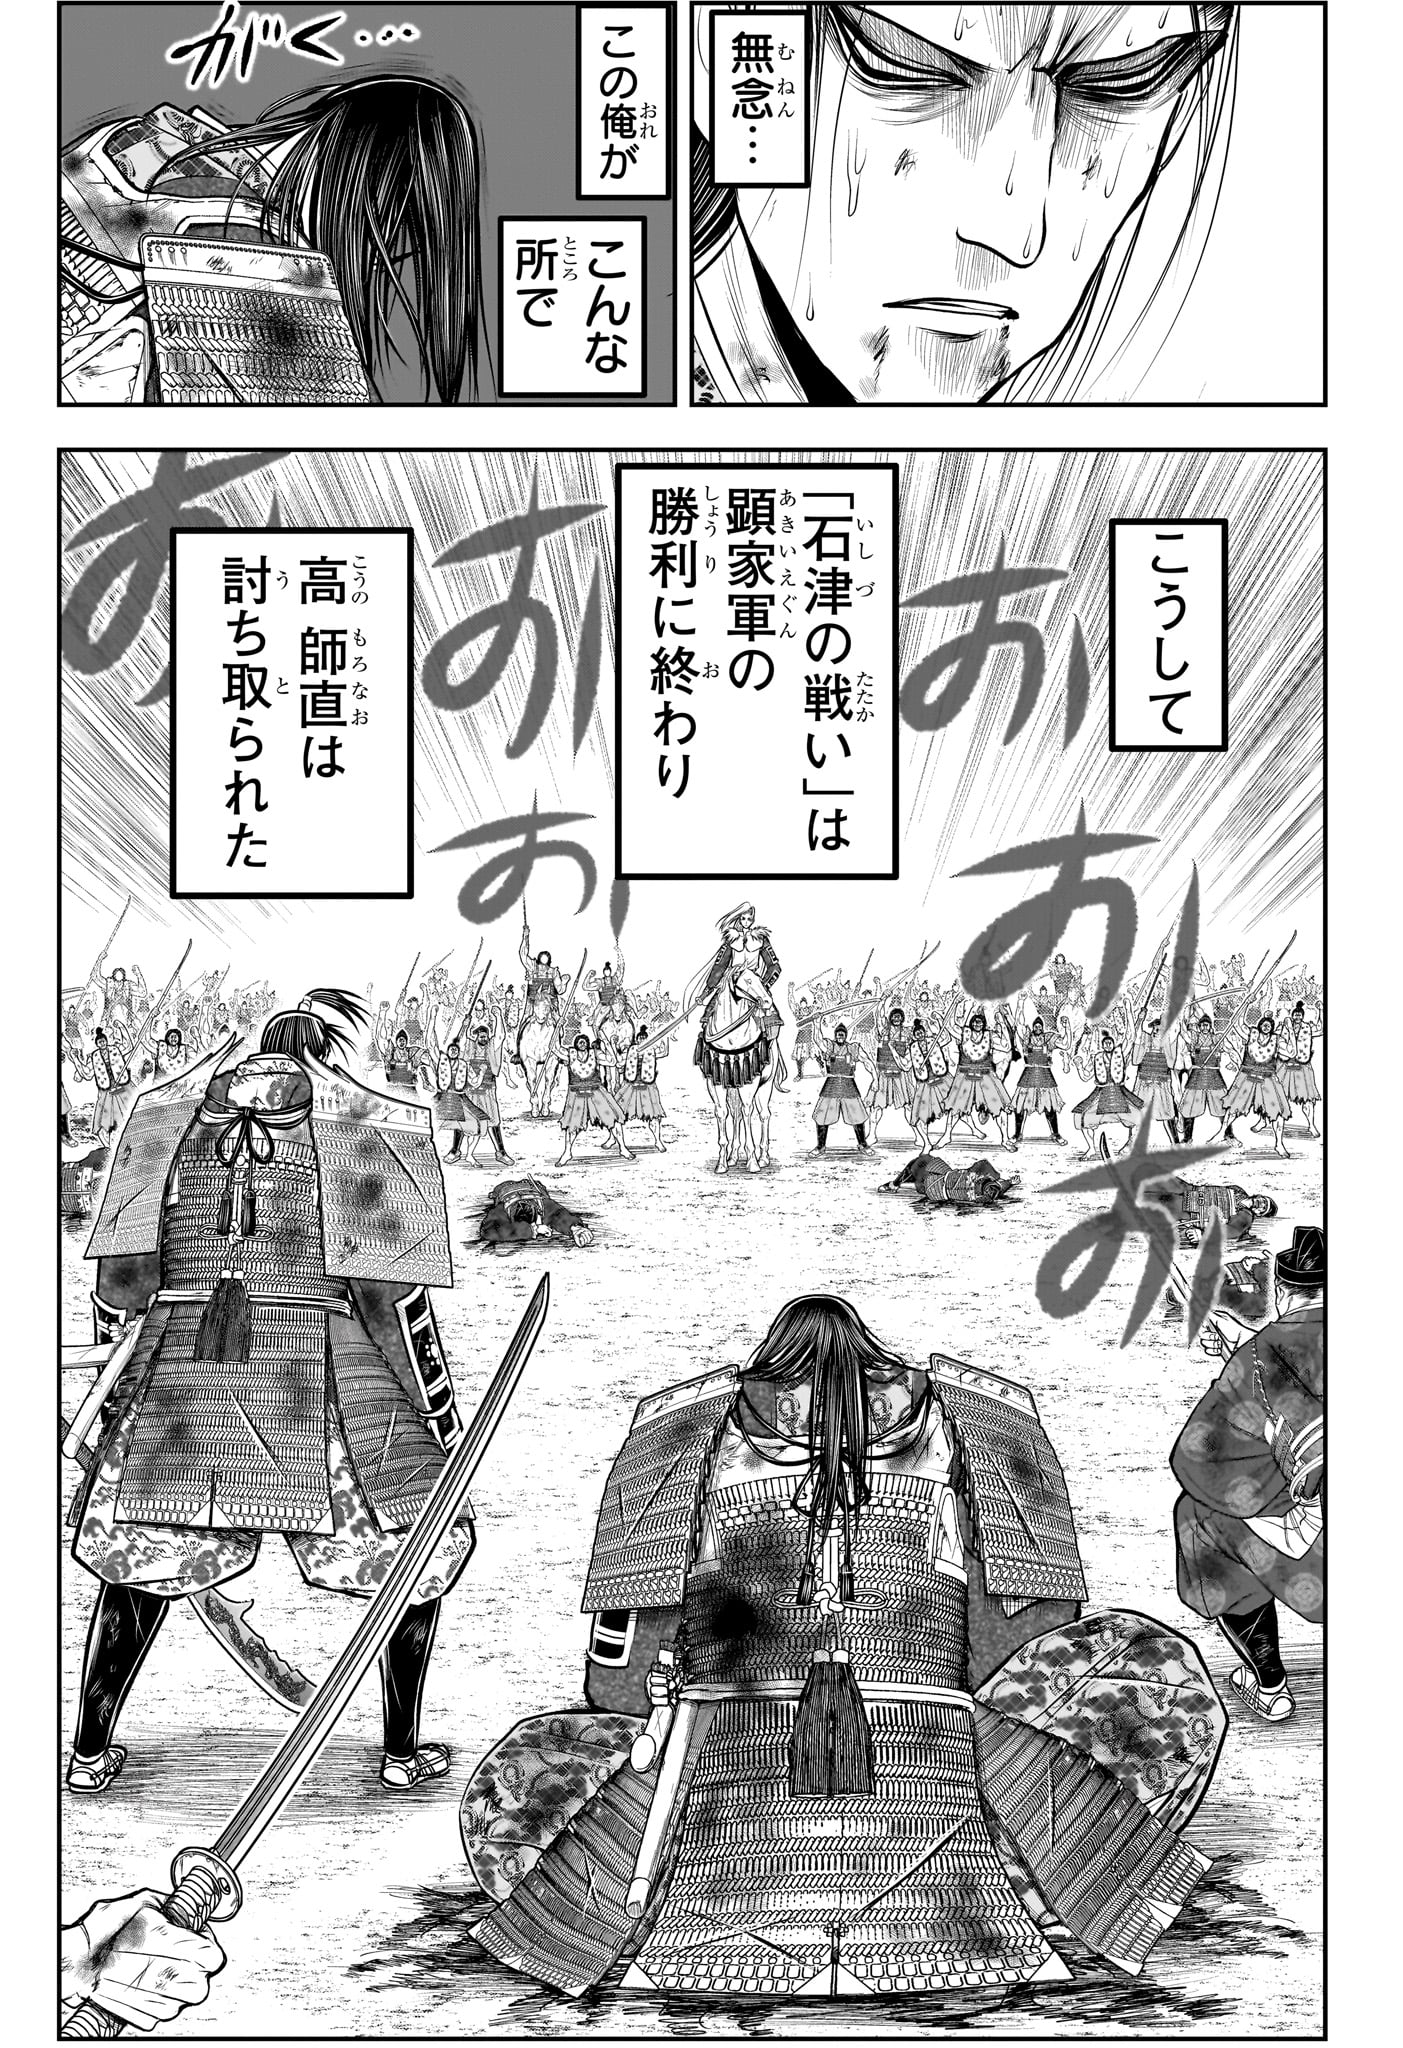 Nige Jouzu no Wakagimi - Chapter 165 - Page 7